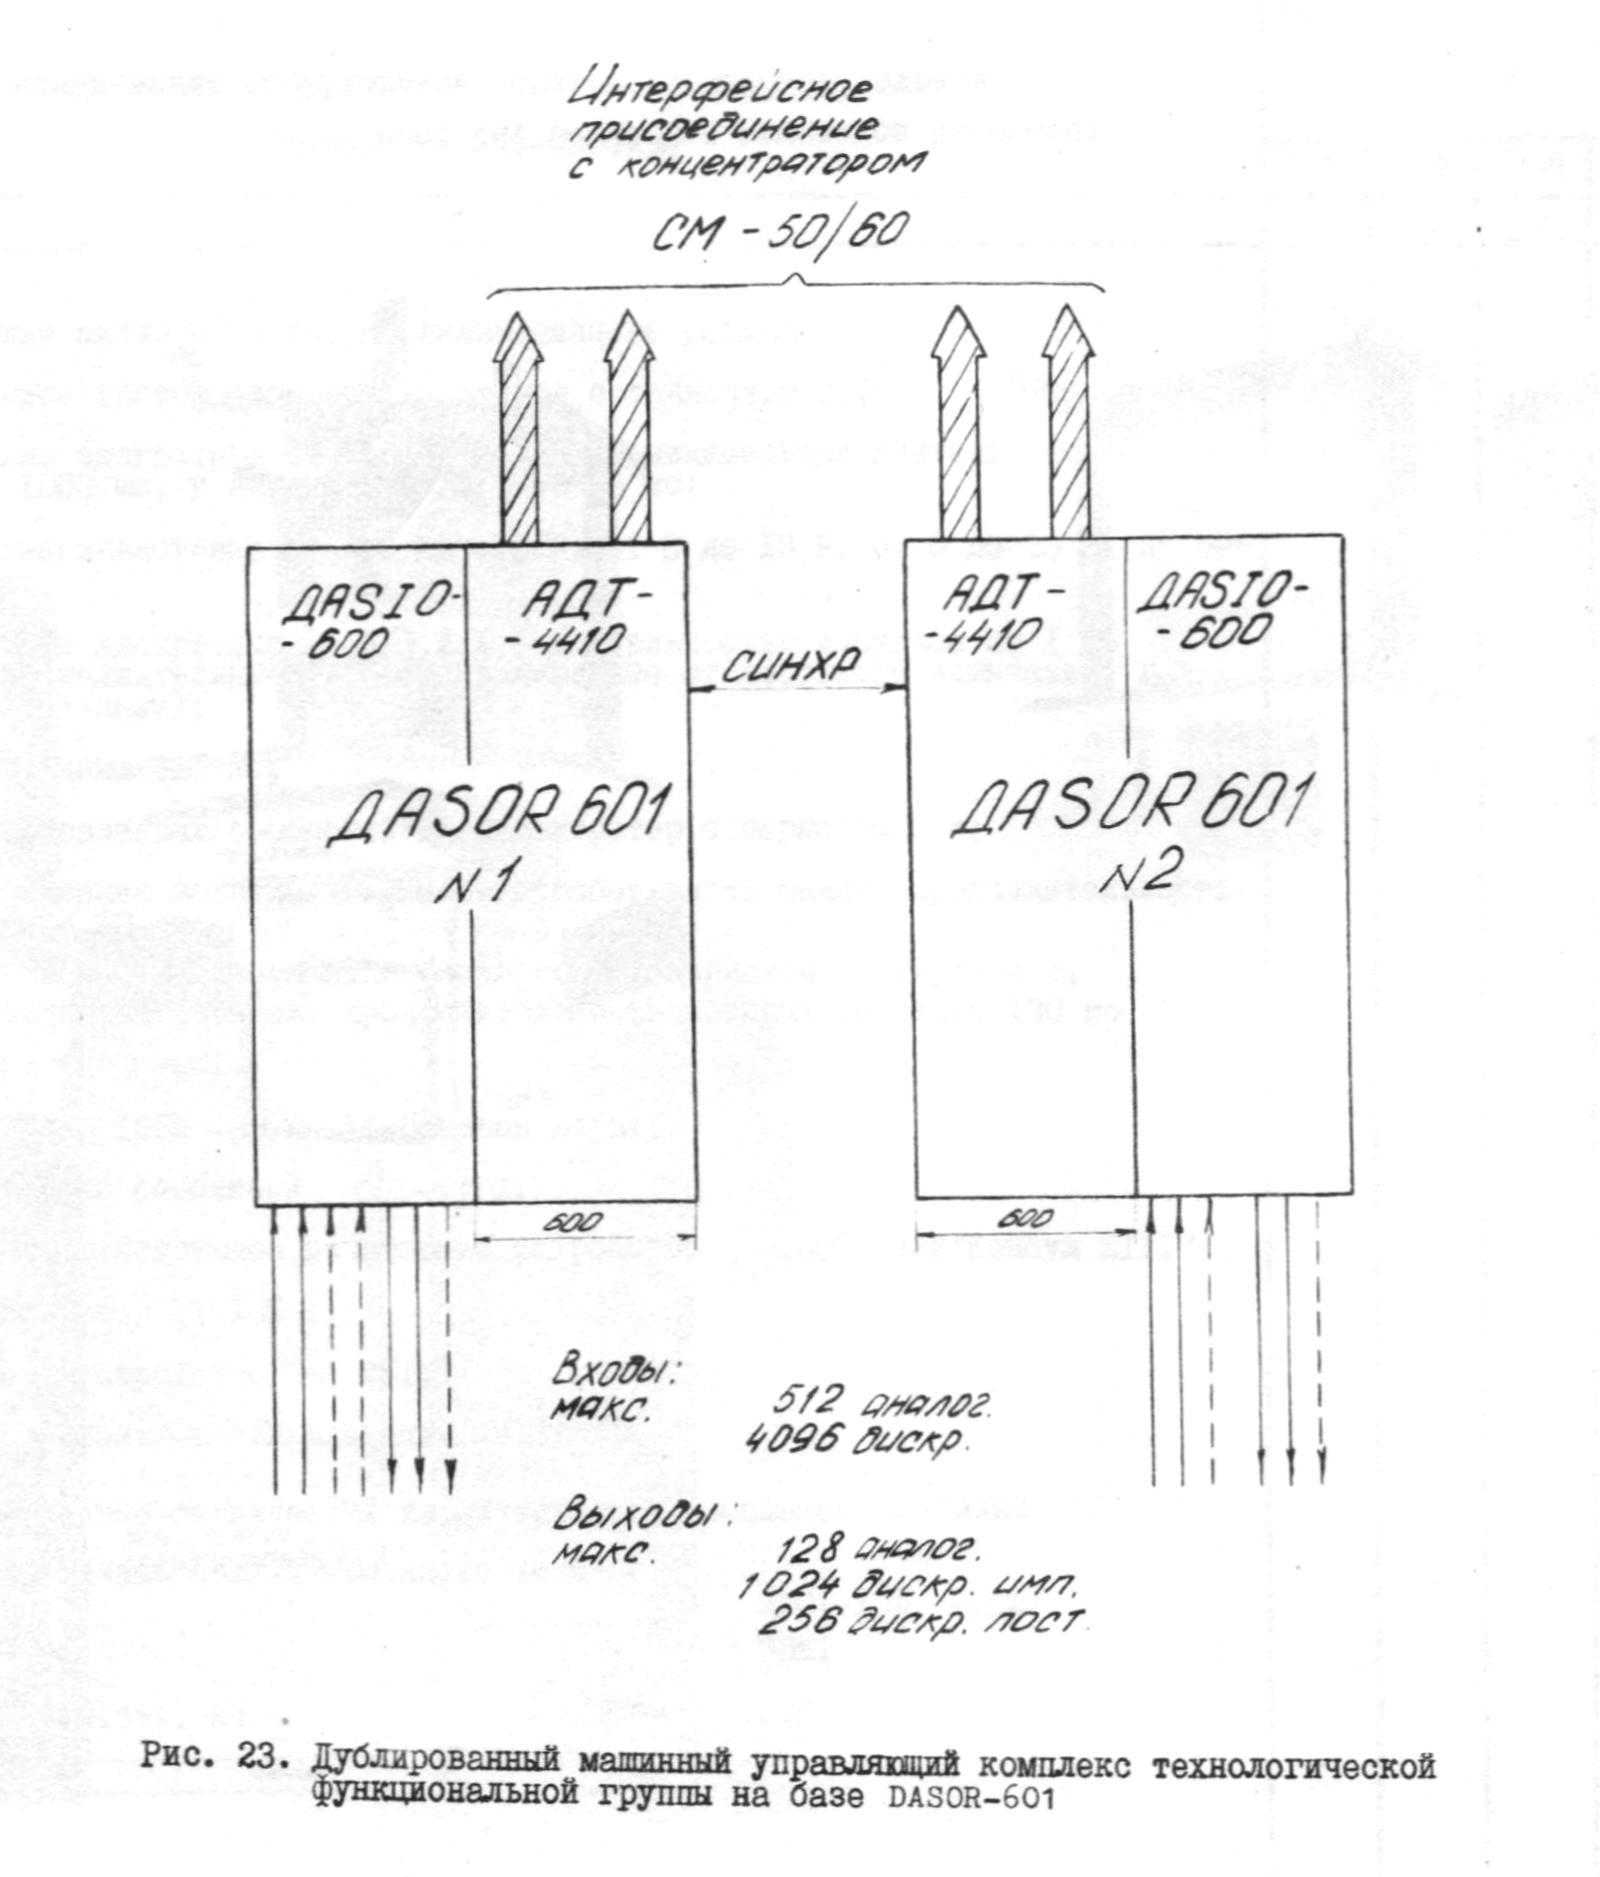 Nuclear Power Plan Stendal, Katalog Kontroll- und Megerte, S. 93 